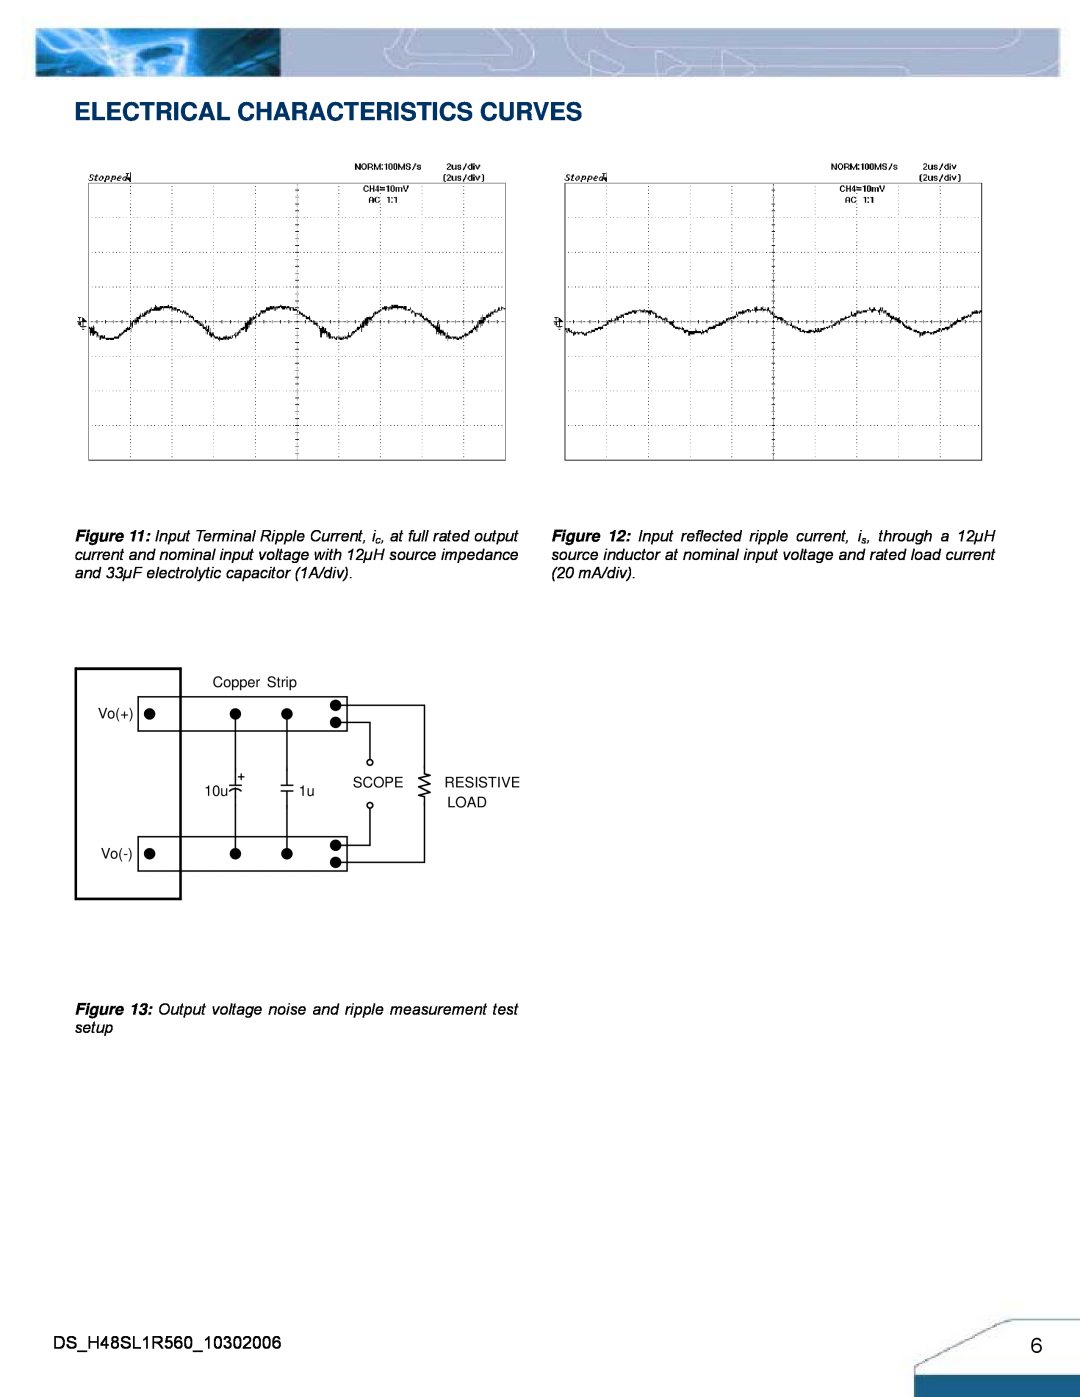 Delta Electronics H48SL manual Electrical Characteristics Curves, Output voltage noise and ripple measurement test setup 